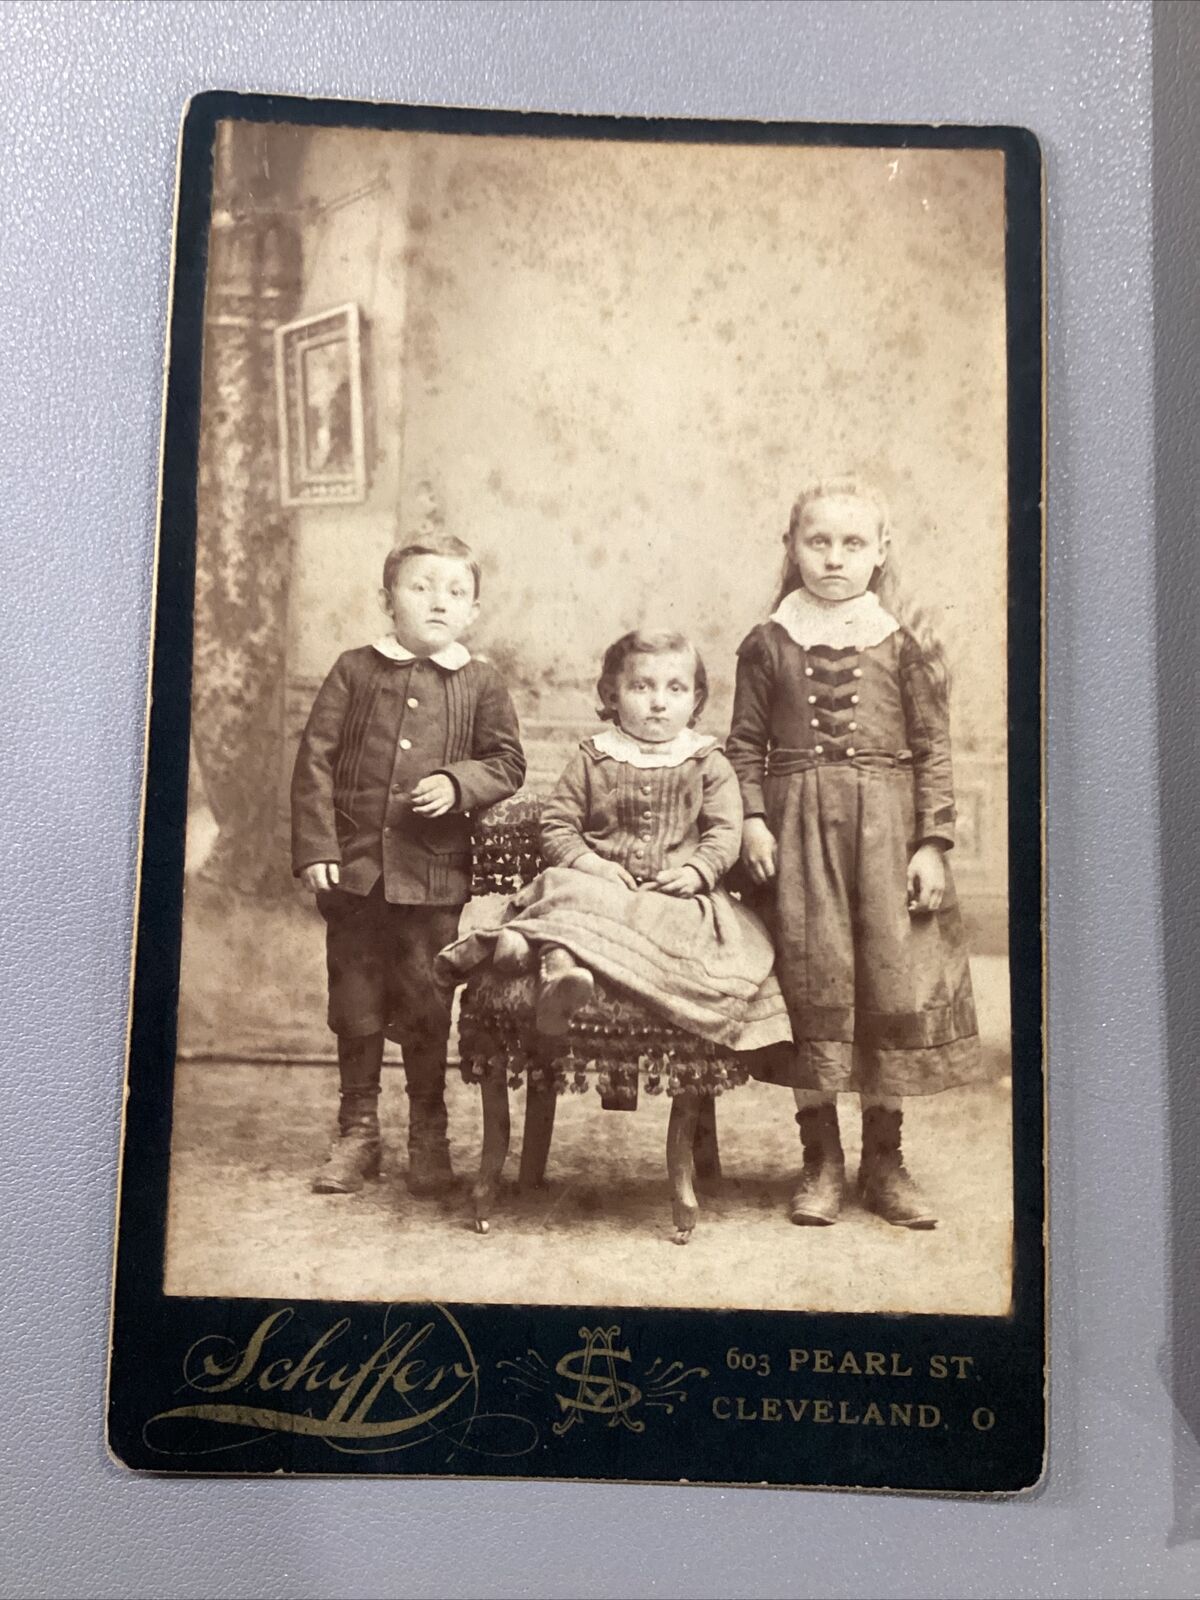 1870-1890’s Cleveland Ohio Schiffer Studio Cabinet Card Photo 3 Children Pose